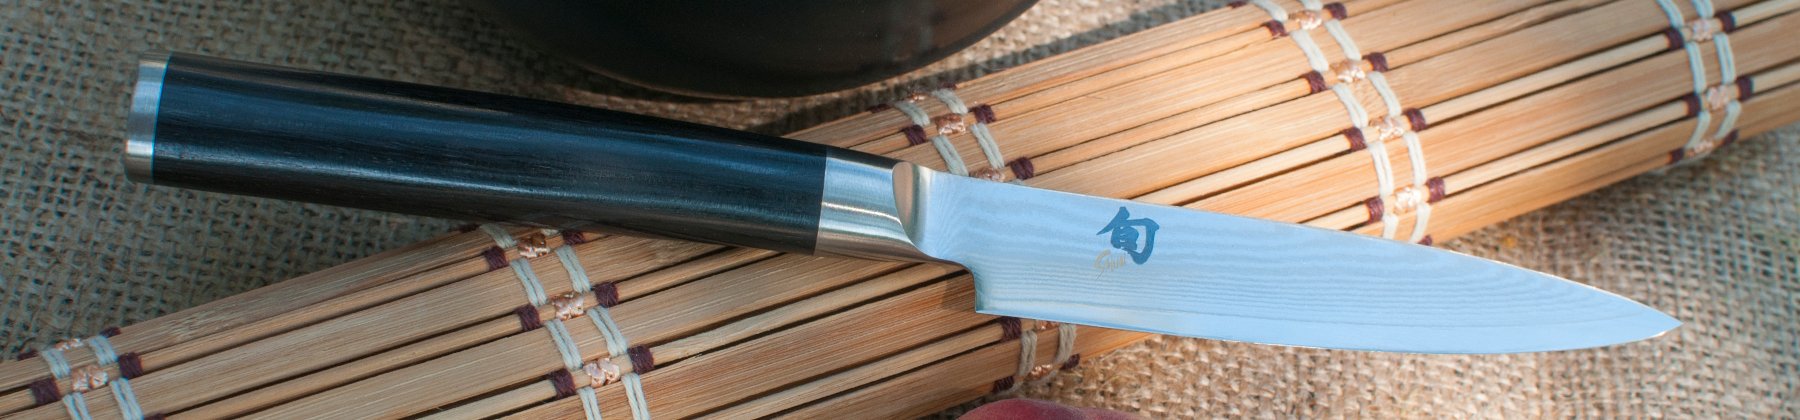 Photo of Shun paring knife.